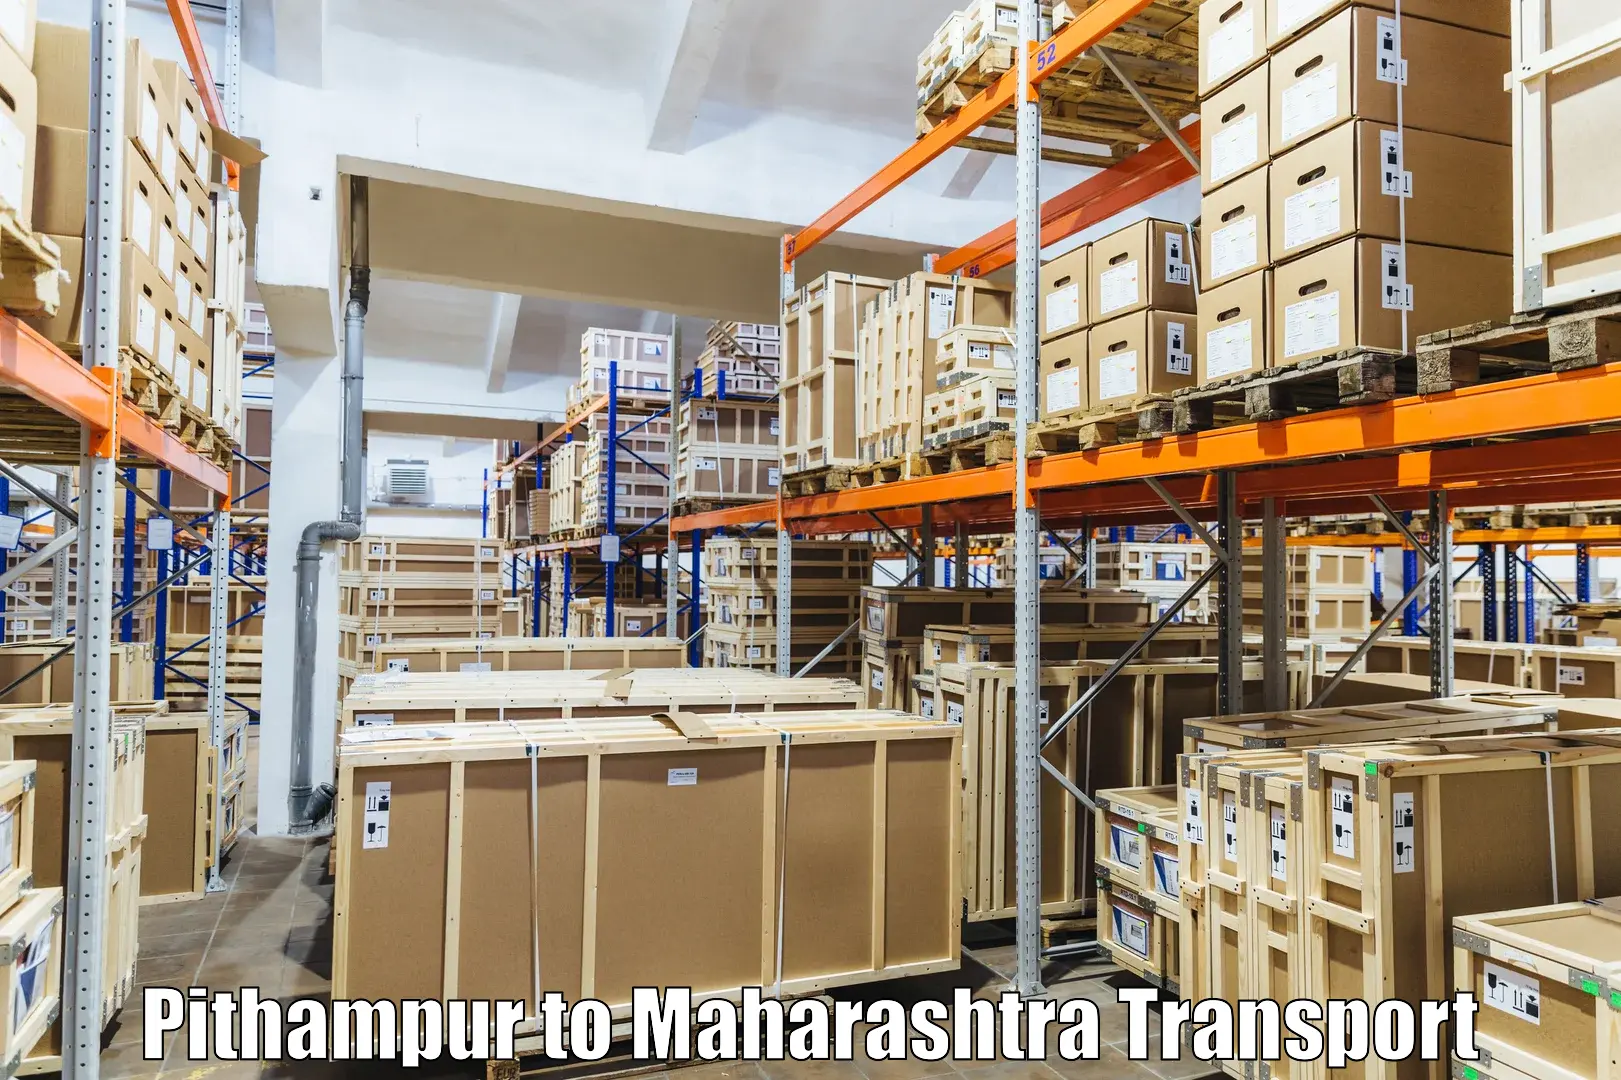 Land transport services in Pithampur to Satara